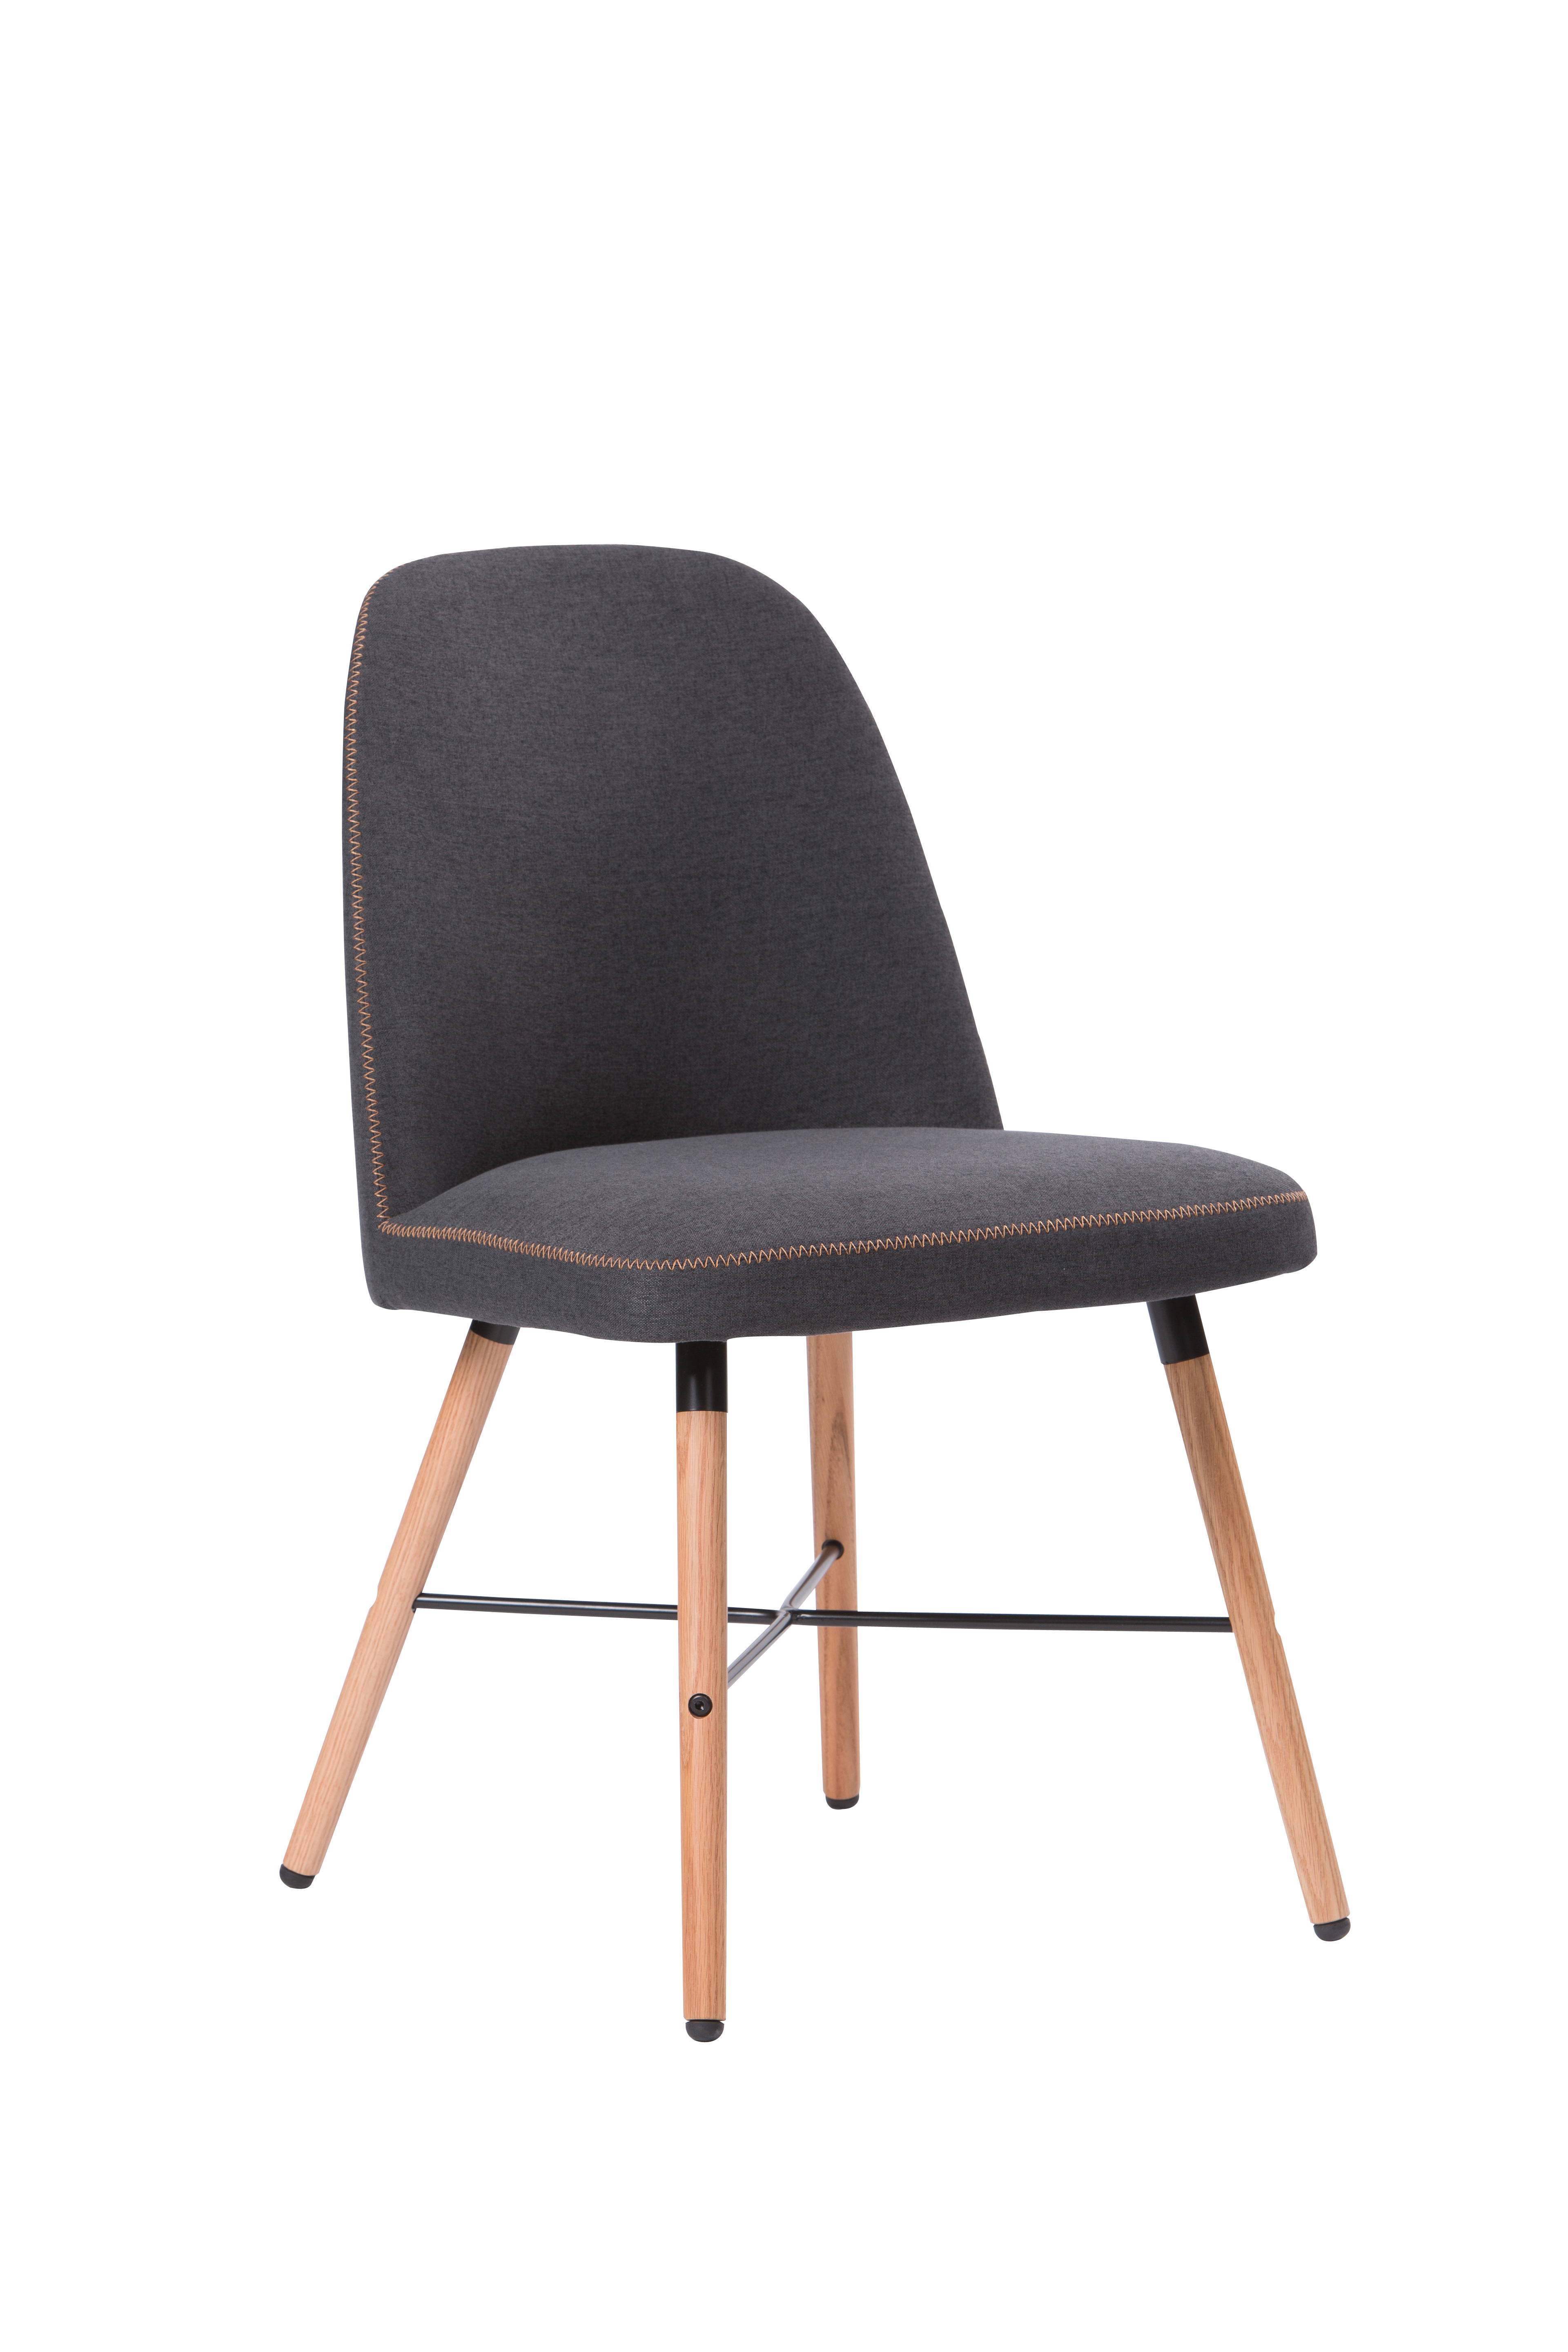 9-01M Modern Fashionable Dining Chair